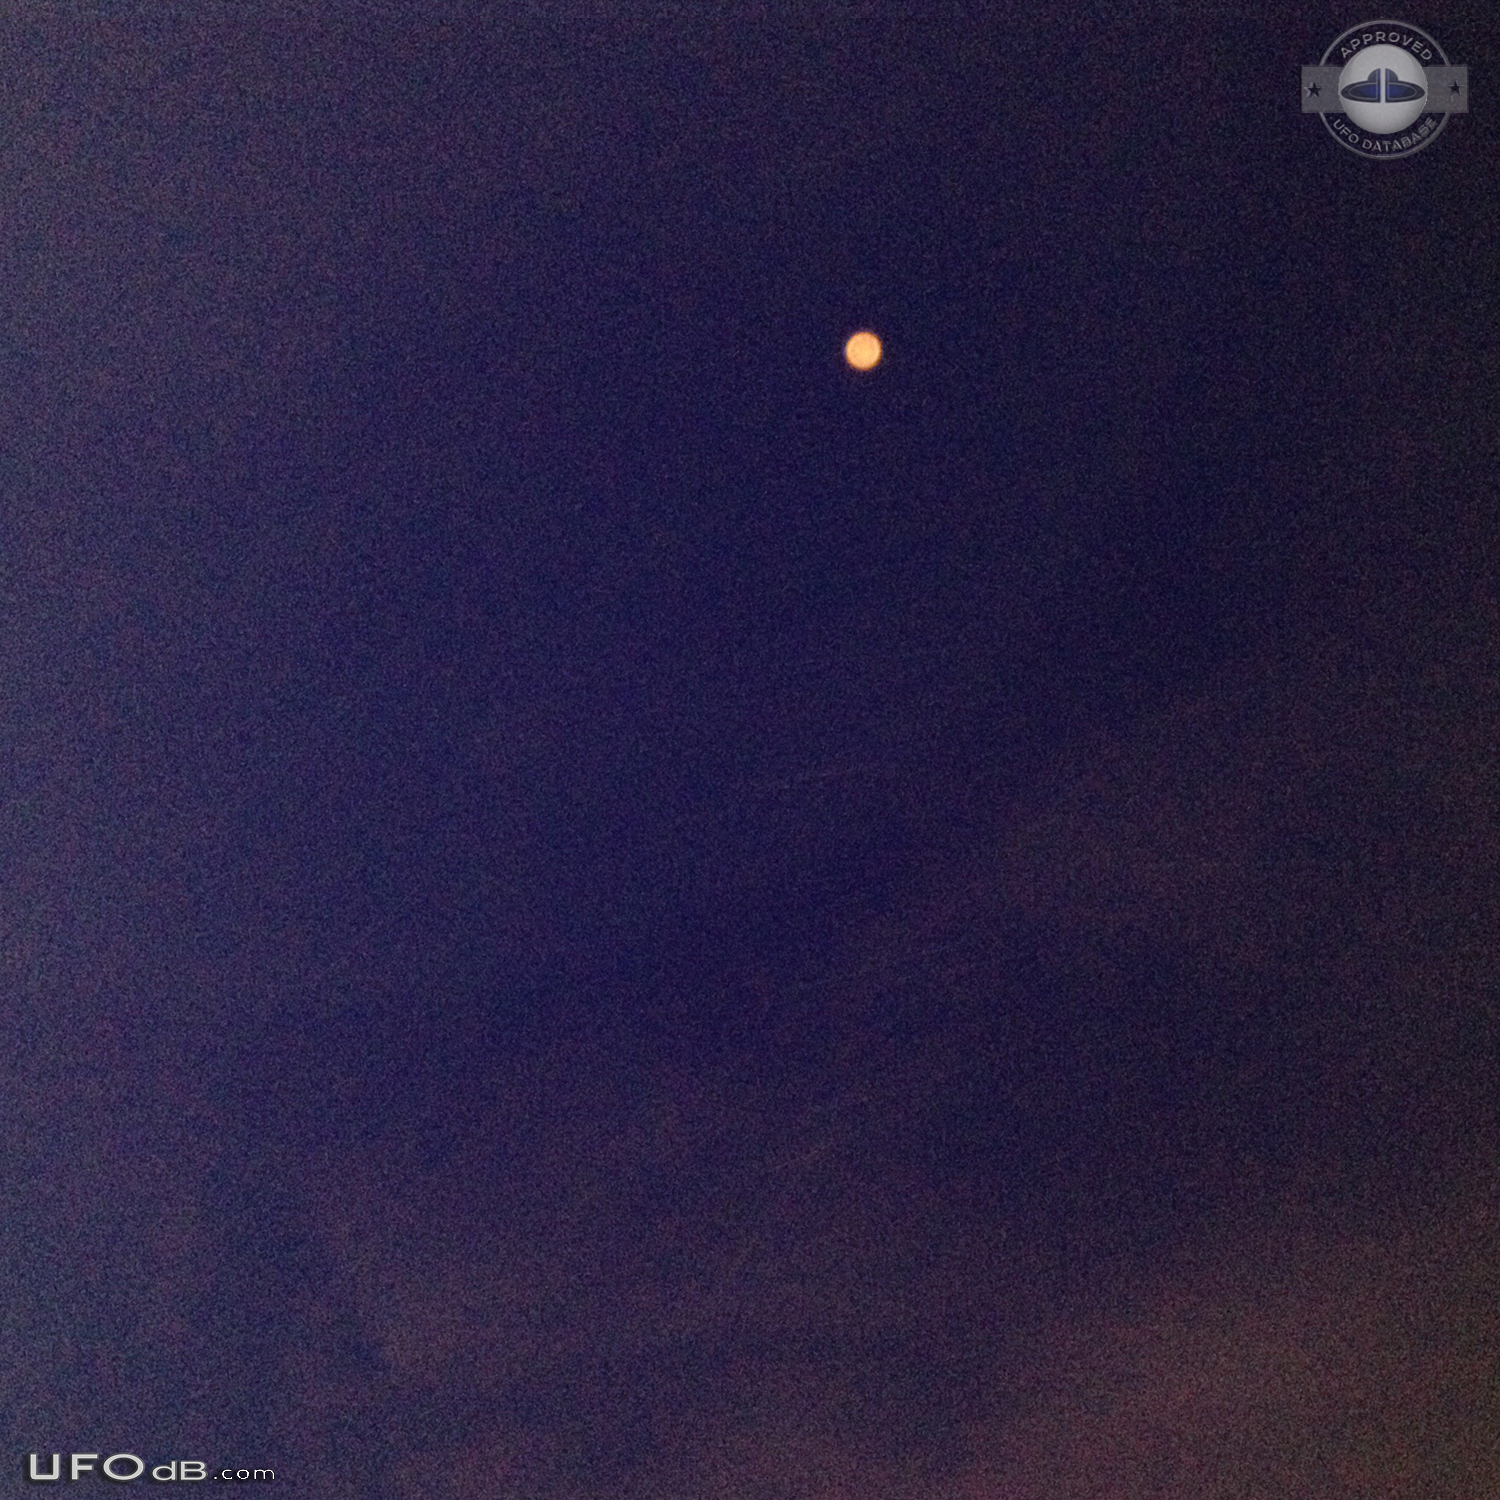 Orange orb UFO transparent edge ring - Huntington Beach California USA UFO Picture #783-2